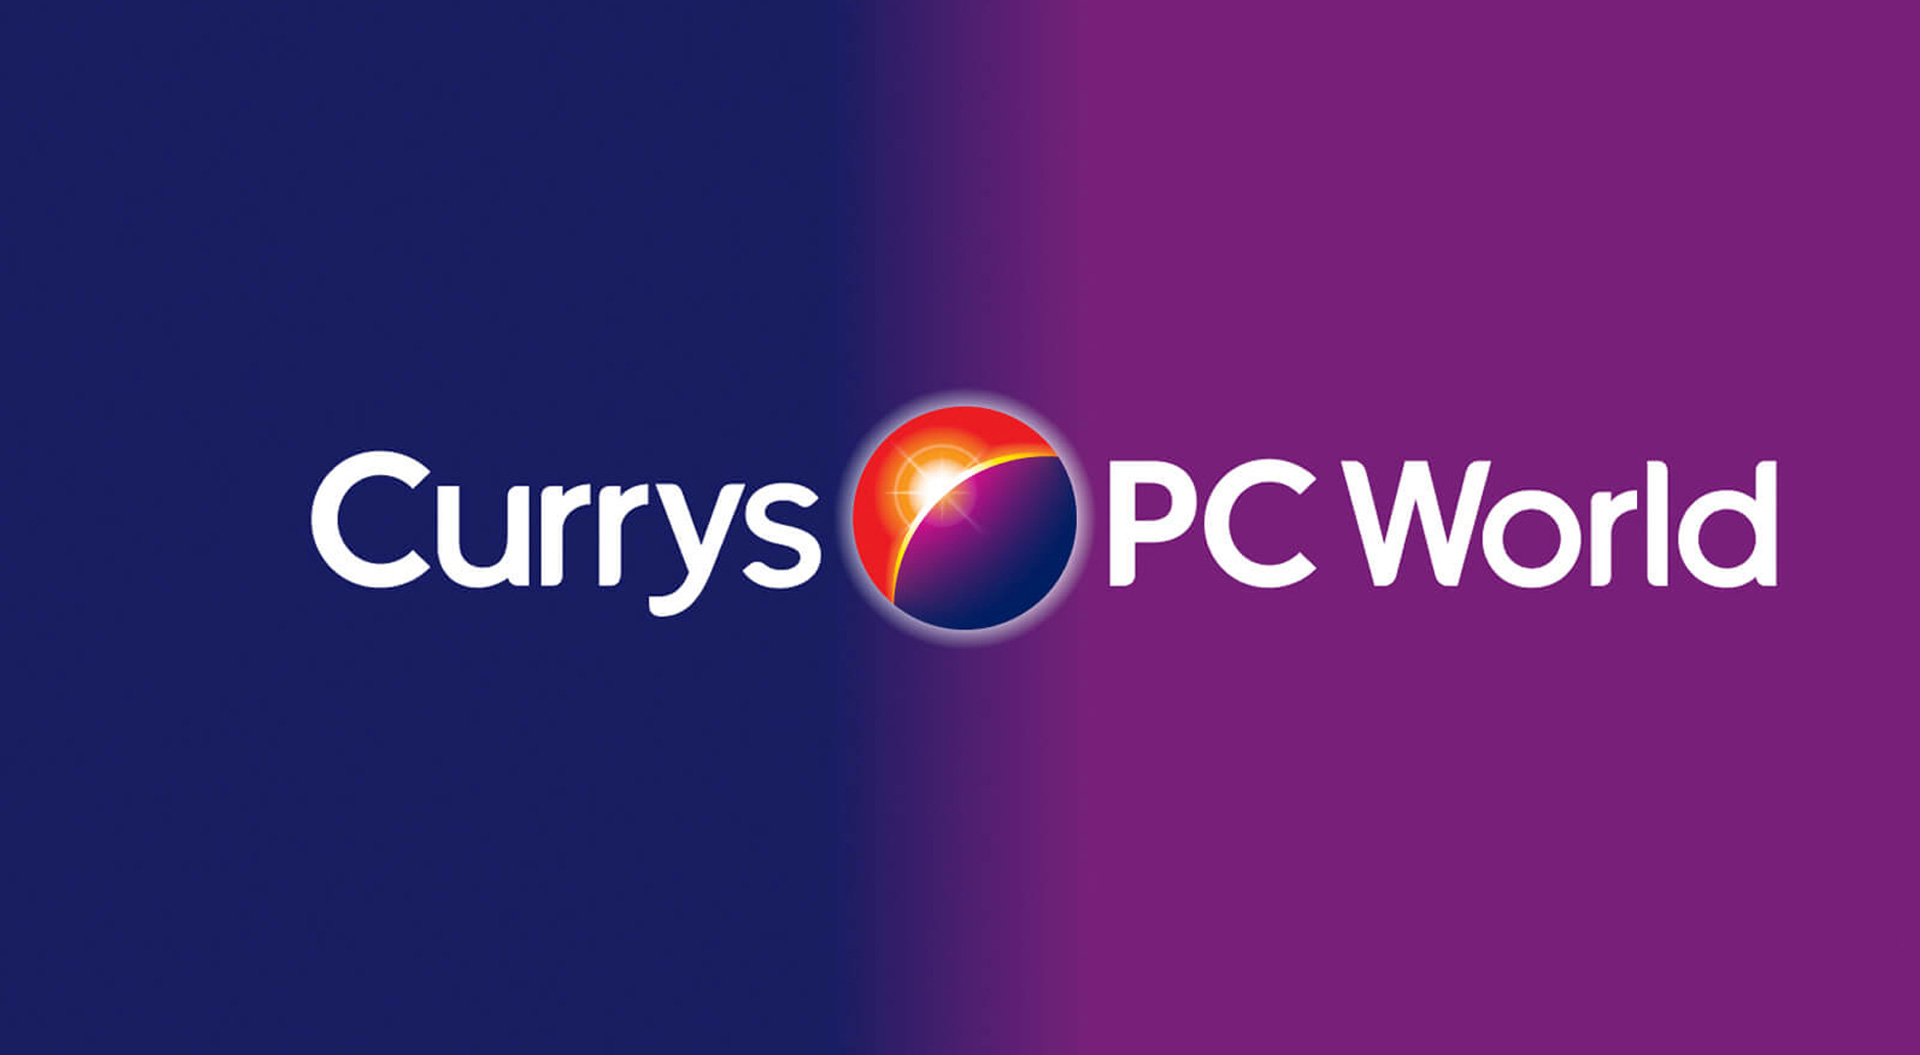 Currys PC World brand identity